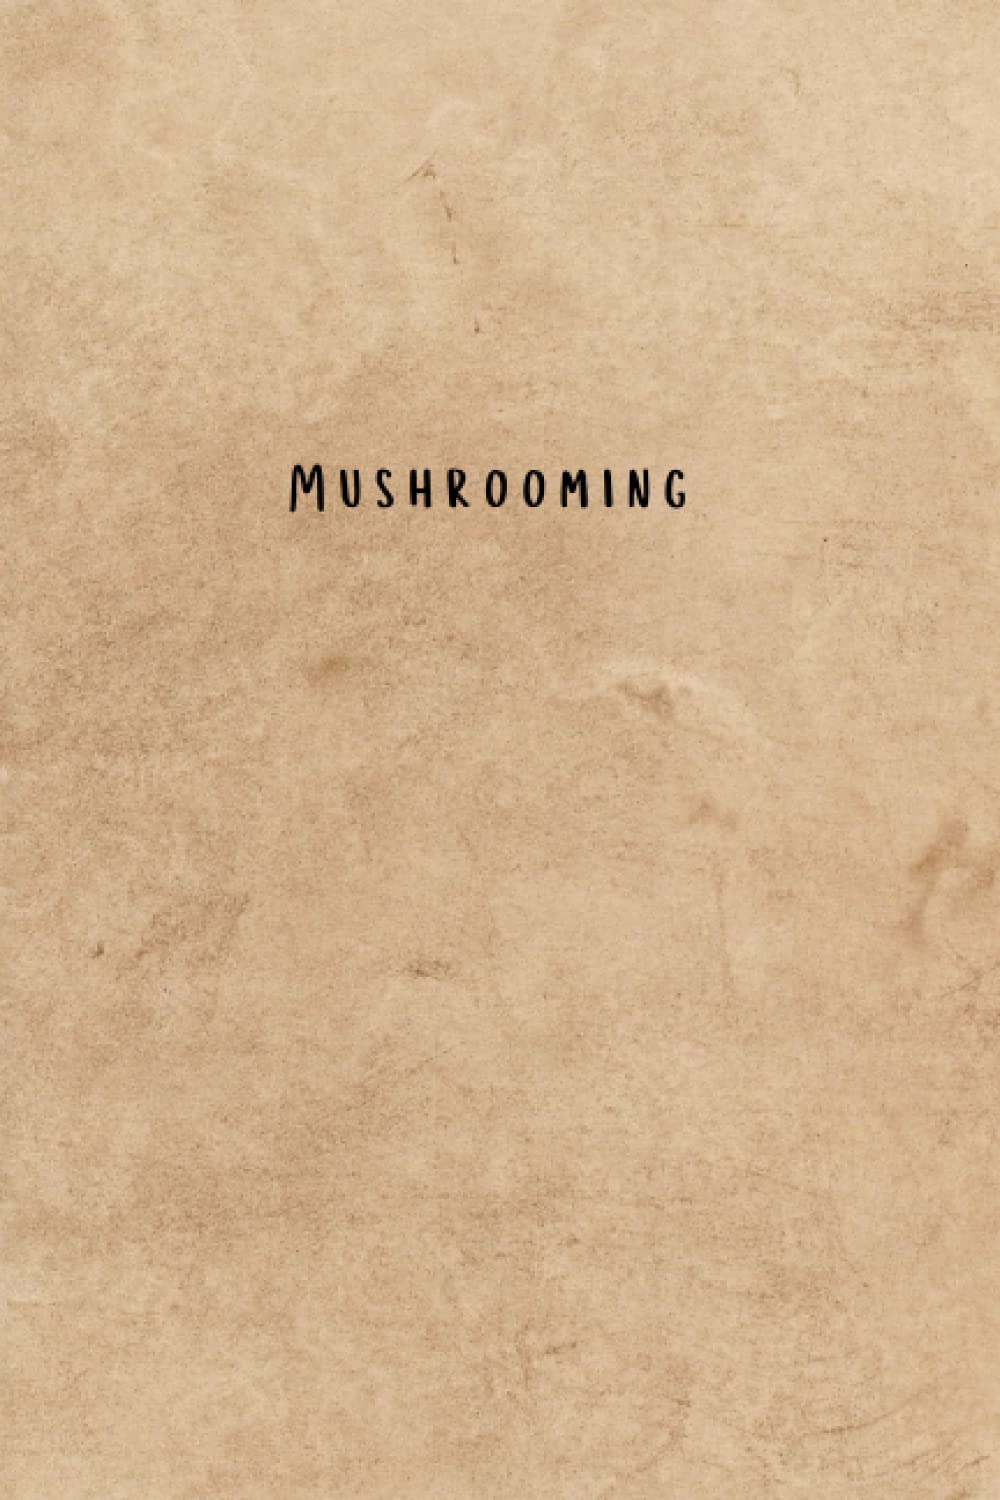 Mushrooming: Log Book for Recording Mushroom Foraging